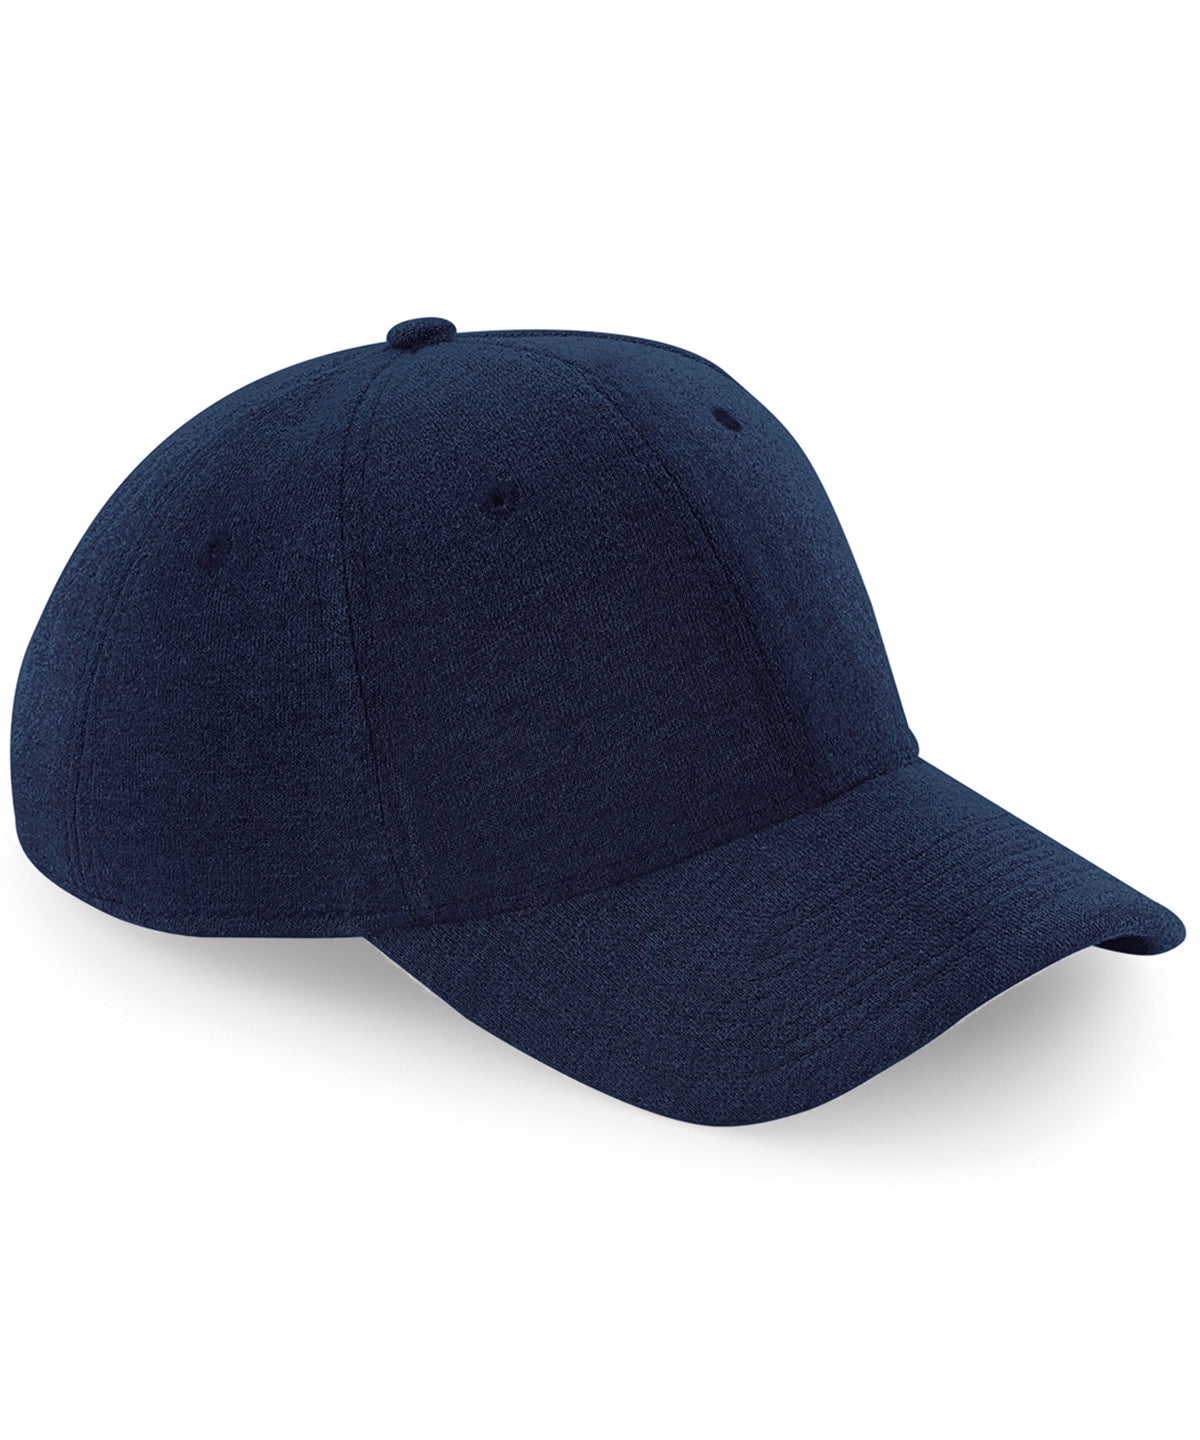 Personalised Caps - Navy Beechfield Jersey athleisure baseball cap